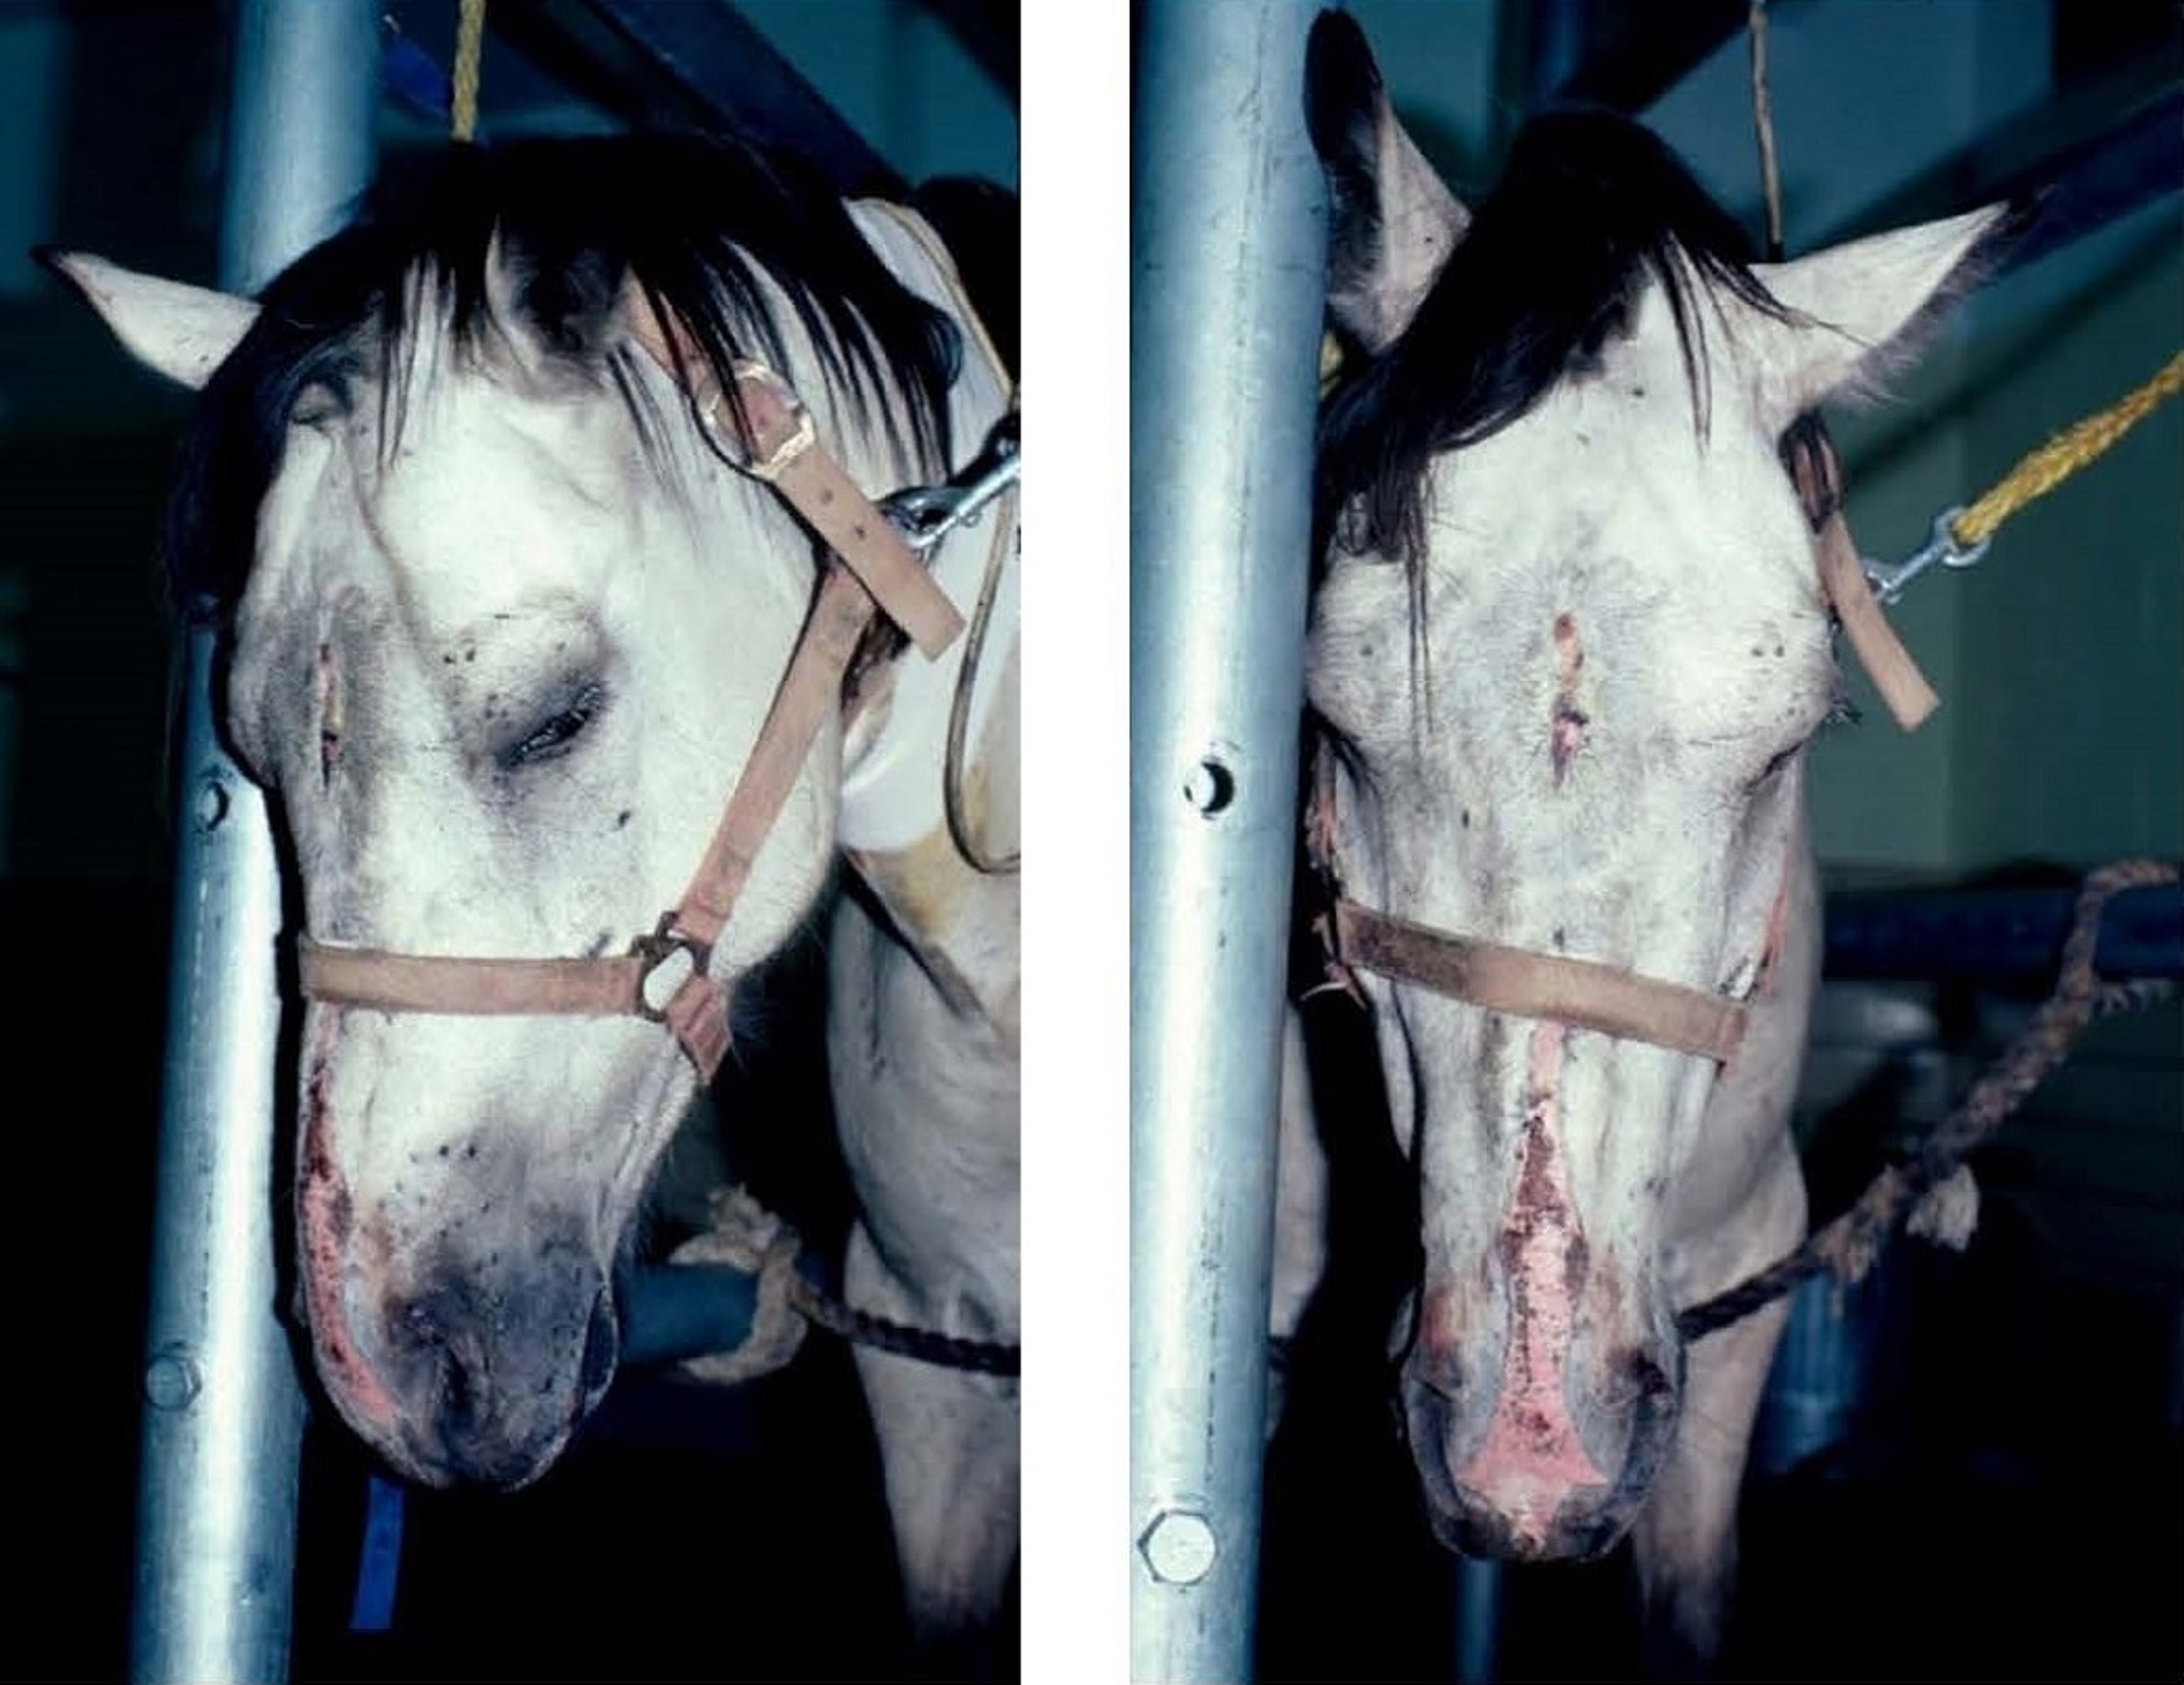 Hepatic encephalopathy and photosensitization, horse